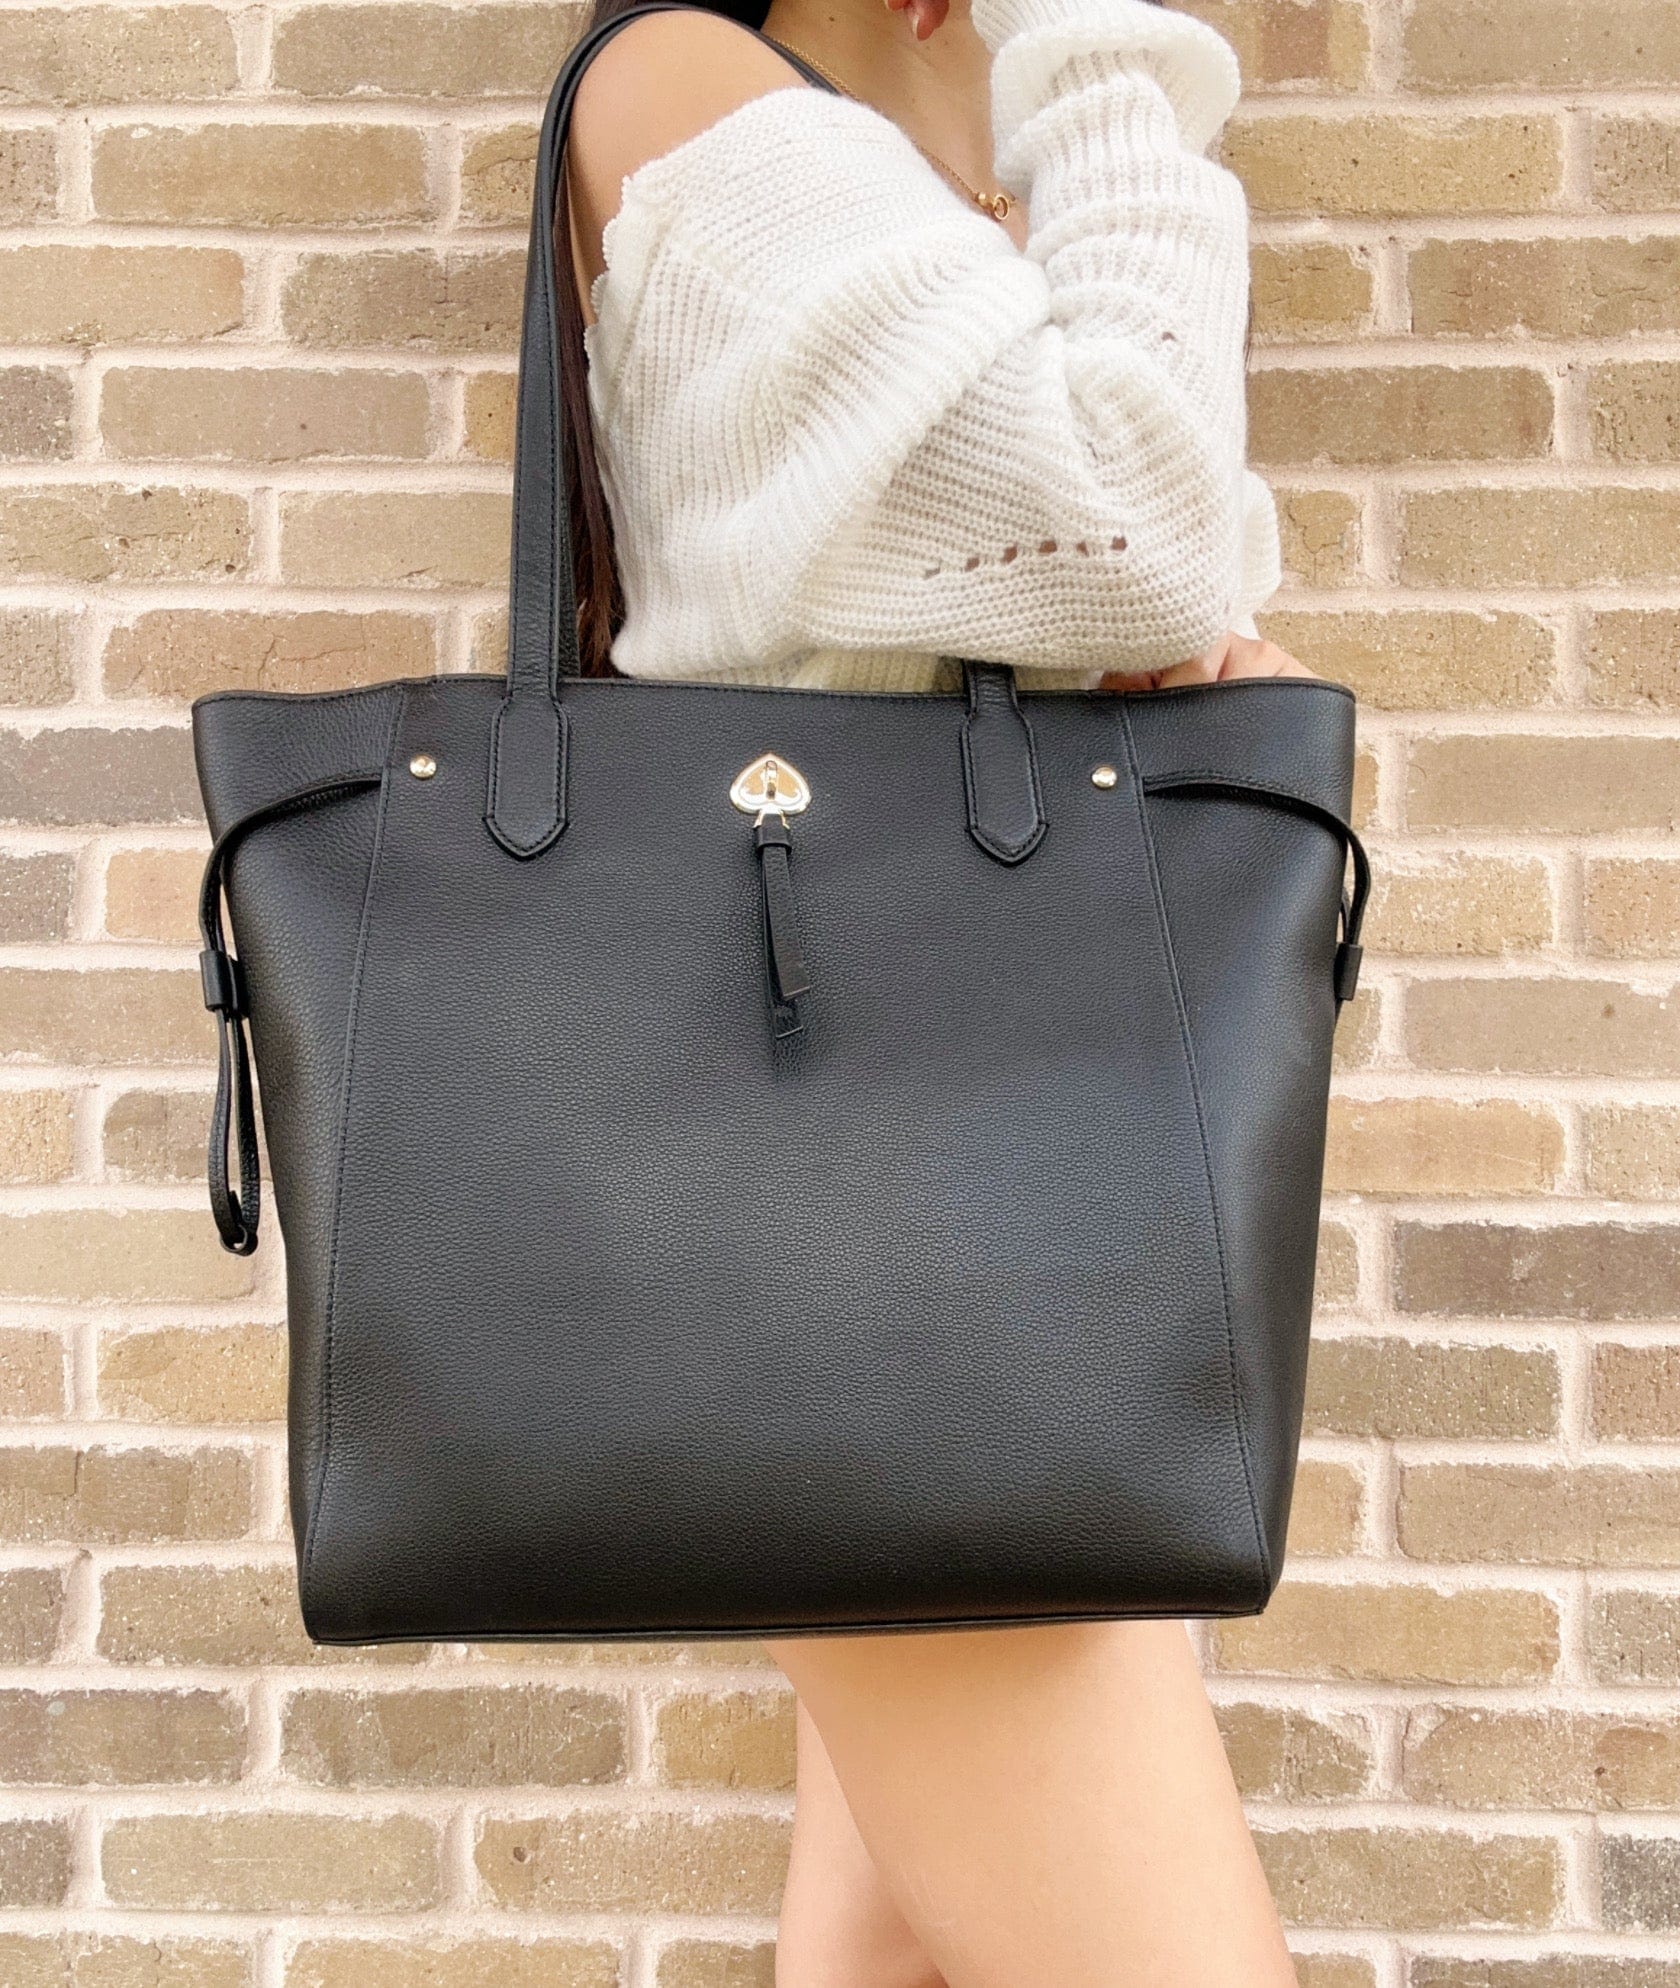 Kate Spade New York Women's Shoulder Bags - Black